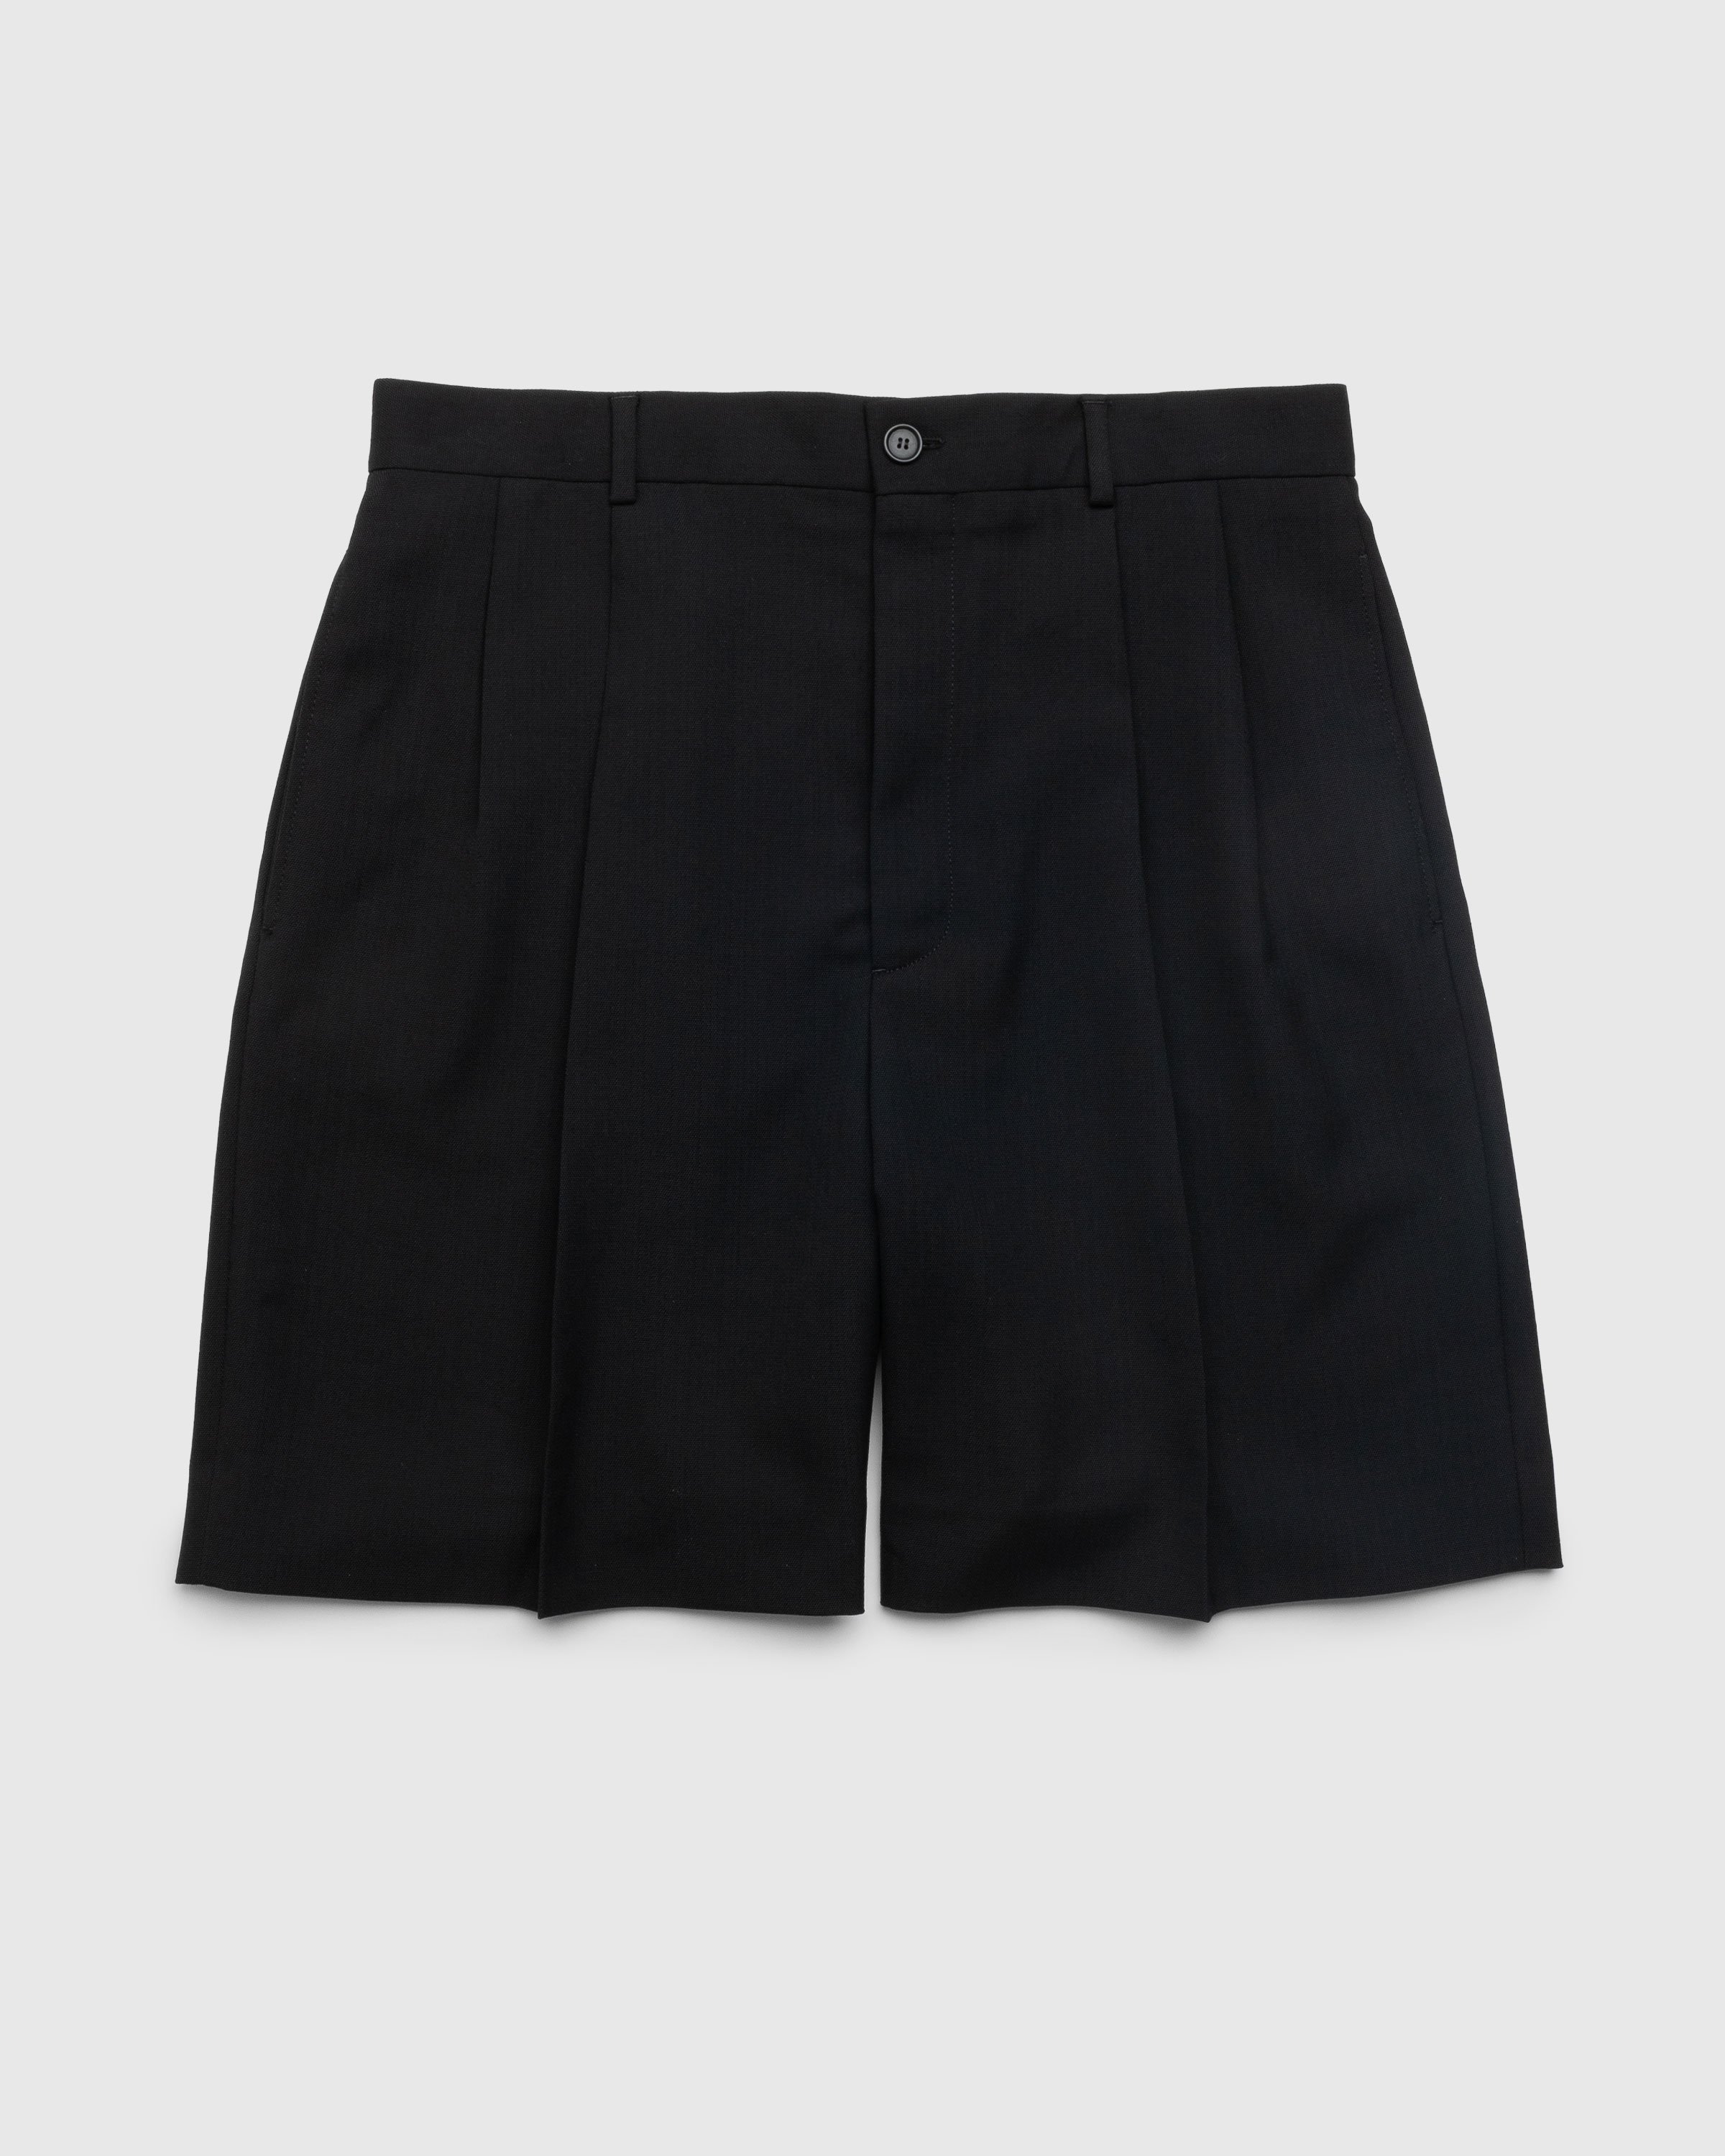 Acne Studios - Tailored Pleated Shorts Black - Clothing - Black - Image 1